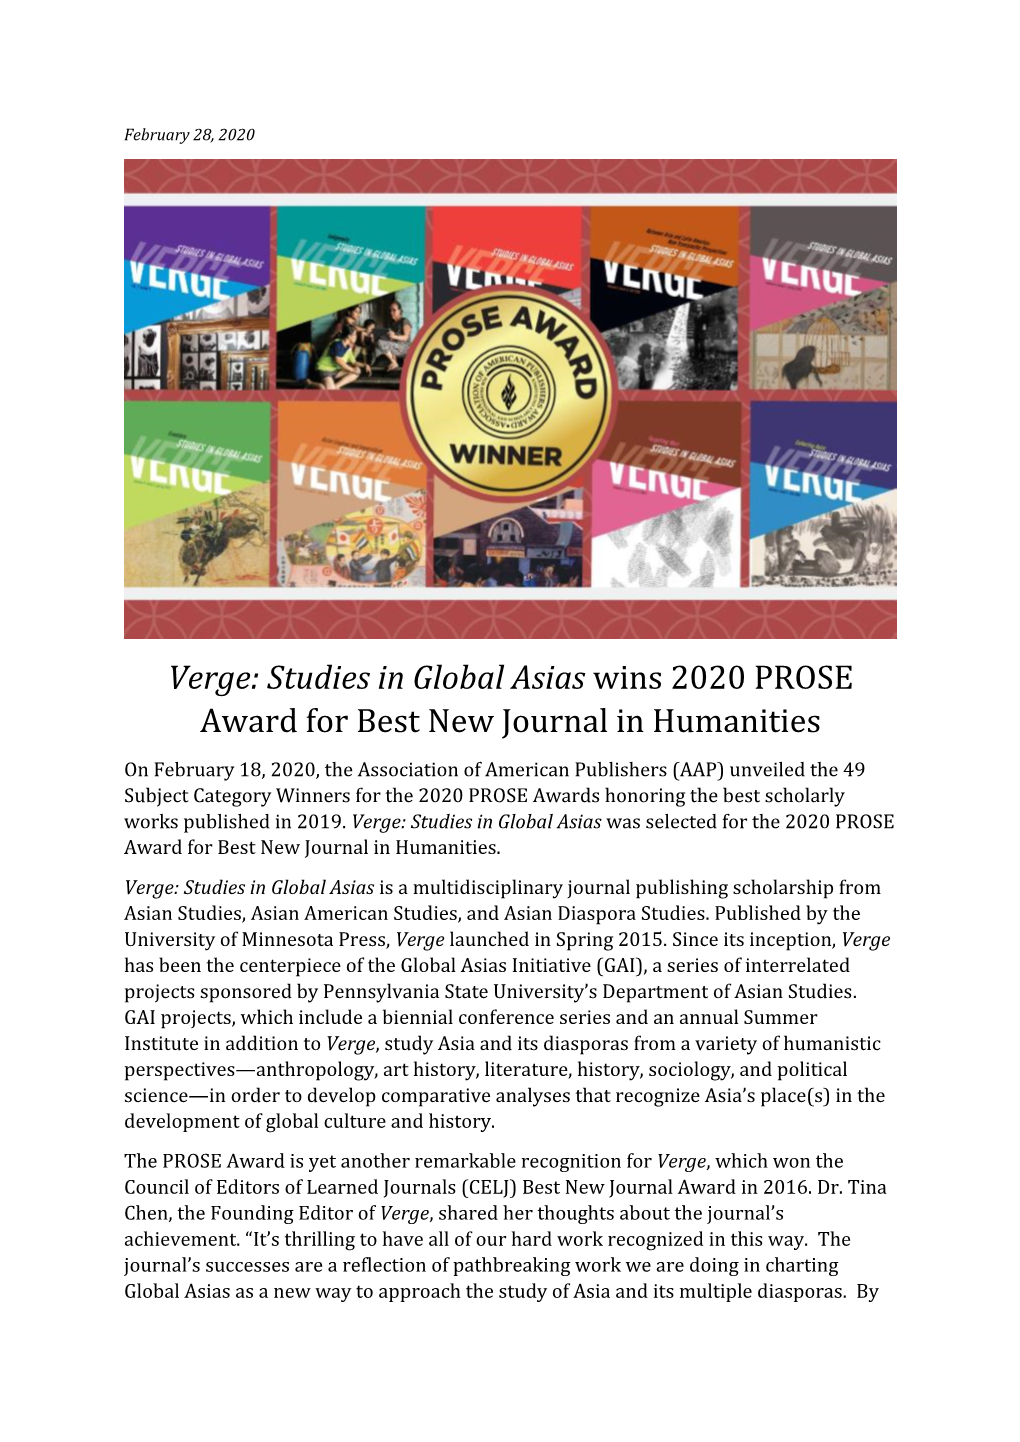 Verge: Studies in Global Asias Wins 2020 PROSE Award for Best New Journal in Humanities